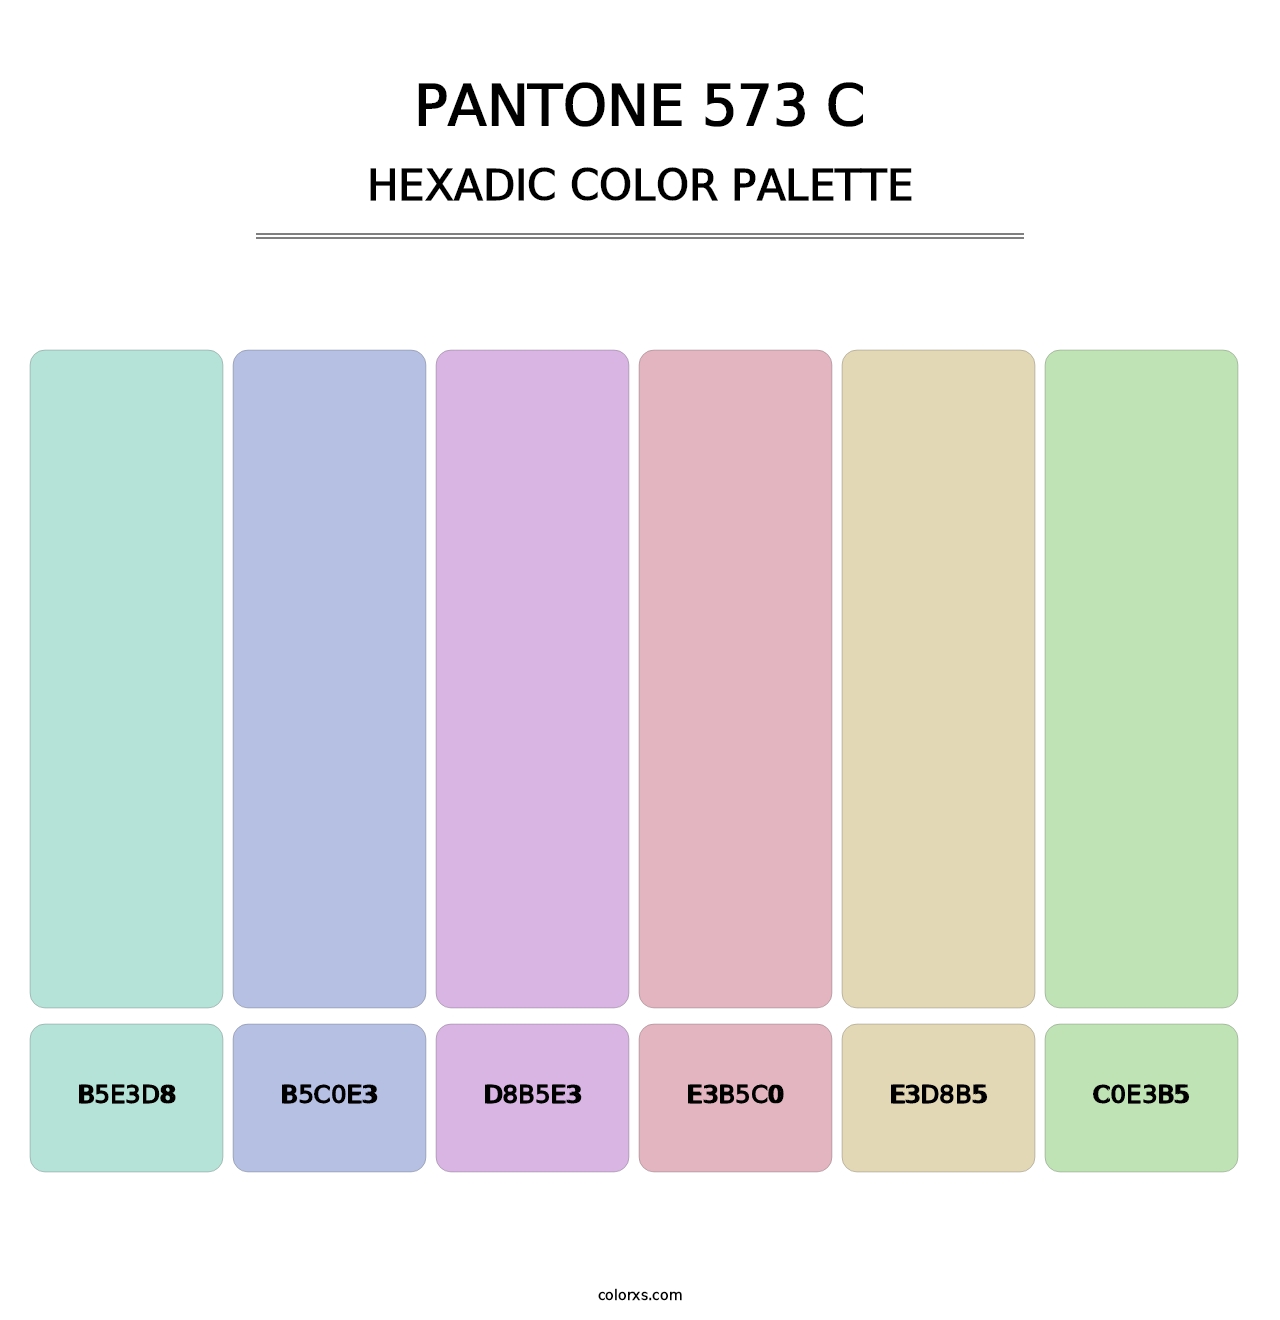 PANTONE 573 C - Hexadic Color Palette